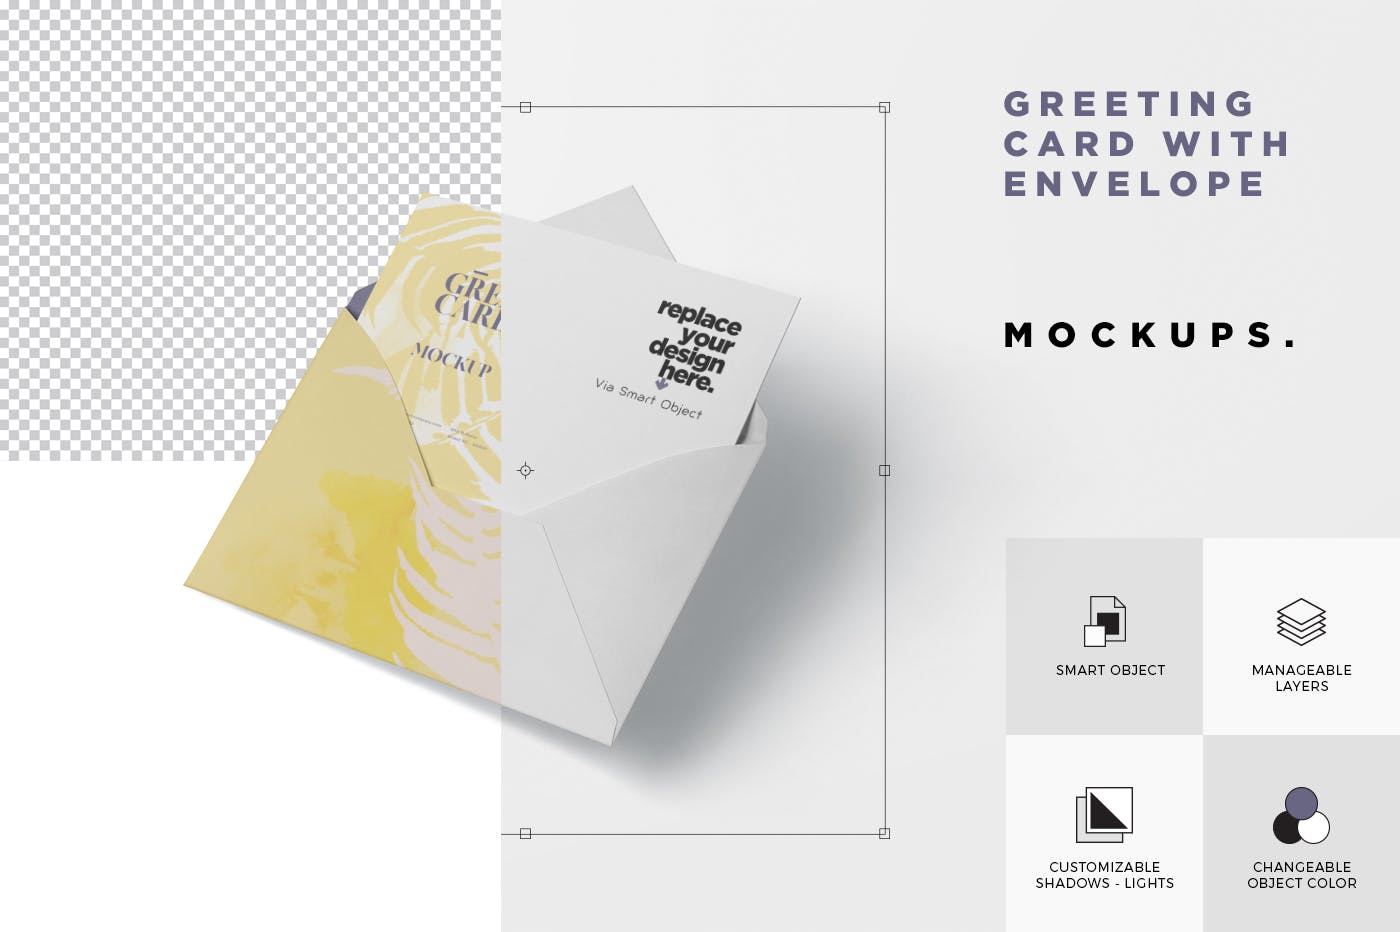 高端企业信封&贺卡设计图素材库精选 Greeting Card Mockup with Envelope – A6 Size插图(5)